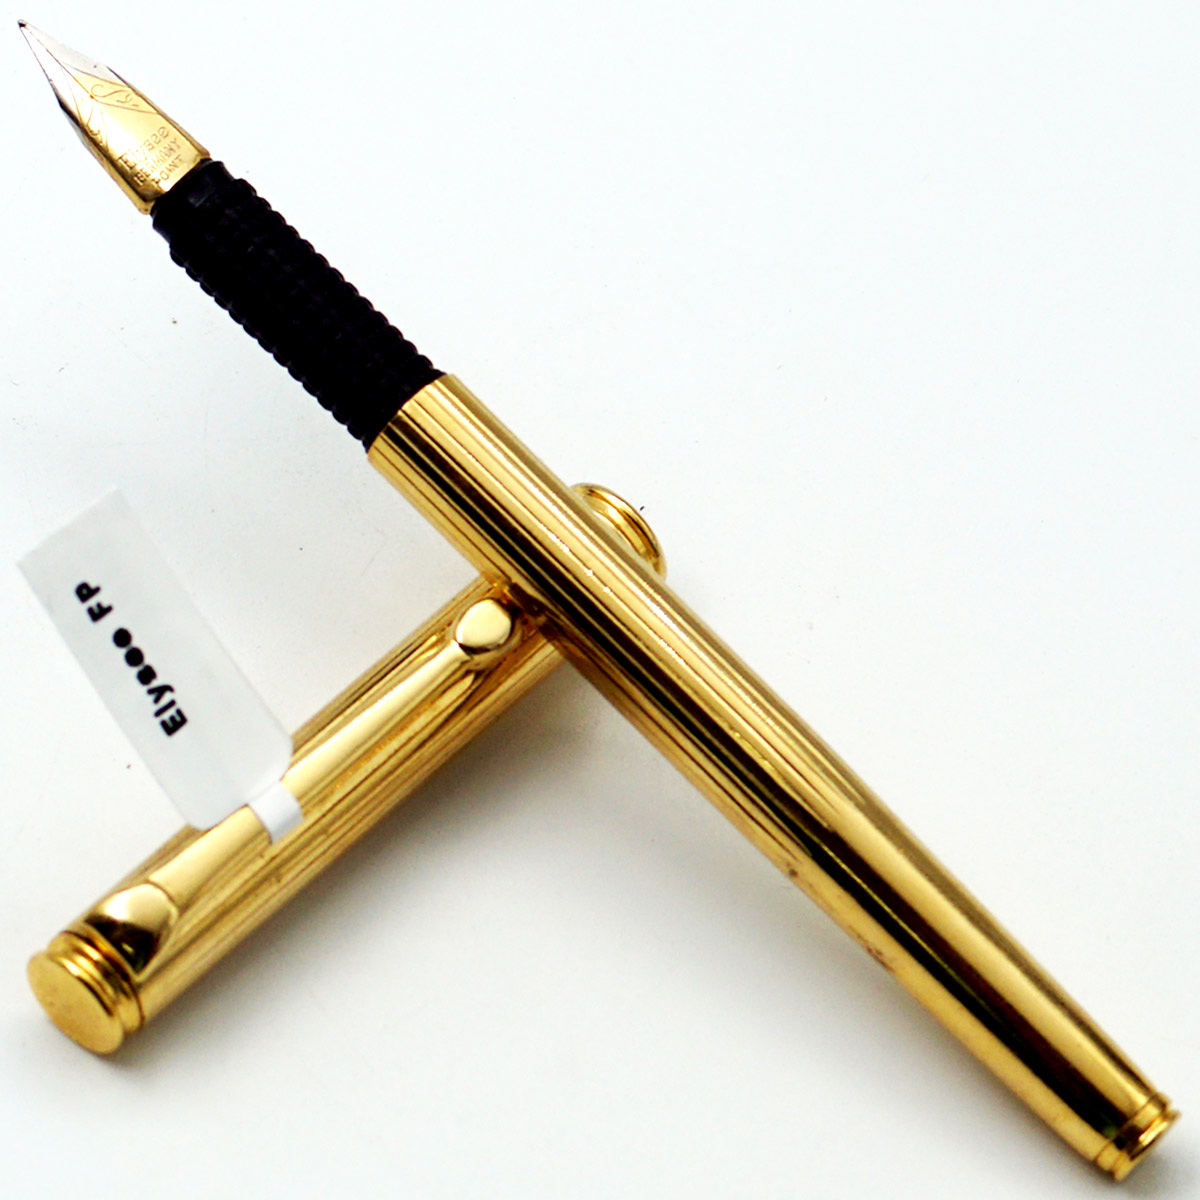 Elysee Golden Color Striped Body With Golden Clip Fine Nib Eye Dropper Model Fountain Pen SKU 24663